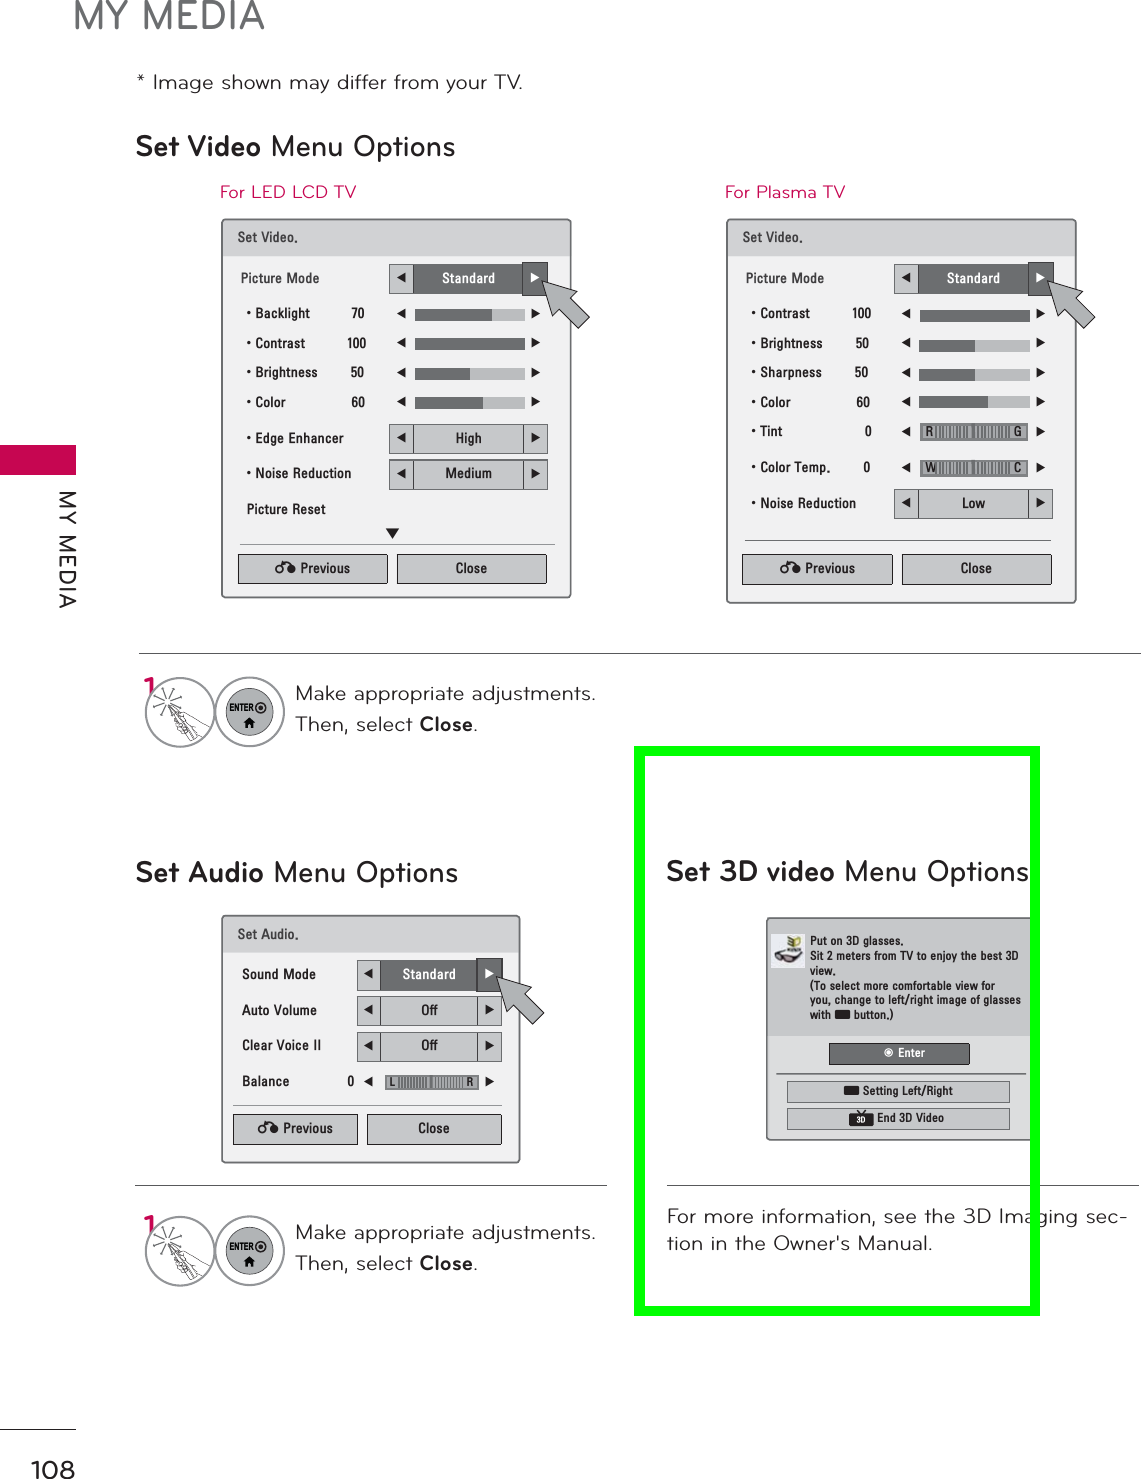 MY MEDIAMY MEDIA108* Image shown may differ from your TV.Set Video Menu OptionsSet Audio Menu Options Set 3D video Menu Options6HW9LGHR3LFWXUH0RGH ܁6WDQGDUG ۽ؒ%DFNOLJKW ܁۽ؒ&amp;RQWUDVW ܁۽ؒ%ULJKWQHVV ܁۽ؒ&amp;RORU ܁۽ؒ(GJH(QKDQFHU ܁+LJK ۽ؒ1RLVH5HGXFWLRQ ܁0HGLXP ۽3LFWXUH5HVHWۿ6HW$XGLR6RXQG0RGH ܁6WDQGDUG ۽$XWR9ROXPH ܁2II ۽&amp;OHDU9RLFH,, ܁2II ۽%DODQFH ܁۽/5For LED LCD TV6HW9LGHR3LFWXUH0RGH ܁6WDQGDUG ۽ؒ&amp;RQWUDVW ܁۽ؒ%ULJKWQHVV ܁۽ؒ6KDUSQHVV ܁۽ؒ&amp;RORU ܁۽ؒ7LQW ܁۽ؒ&amp;RORU7HPS ܁۽ؒ1RLVH5HGXFWLRQ ܁/RZ ۽For Plasma TV5GWC1ENTERMake appropriate adjustments.Then, select Close.1ENTERMake appropriate adjustments.Then, select Close.۽۽۽ᰙ3UHYLRXV &amp;ORVHᰙ3UHYLRXV &amp;ORVHᰙ3UHYLRXV &amp;ORVHᯕ6HWWLQJ/HIW5LJKW(QG&apos;9LGHRᯙ(QWHU3XWRQ&apos;JODVVHV6LWPHWHUVIURP79WRHQMR\WKHEHVW&apos;YLHZ7RVHOHFWPRUHFRPIRUWDEOHYLHZIRU\RXFKDQJHWROHIWULJKWLPDJHRIJODVVHVZLWKᯕEXWWRQ&apos;For more information, see the 3D Imaging sec-tion in the Owner&apos;s Manual.